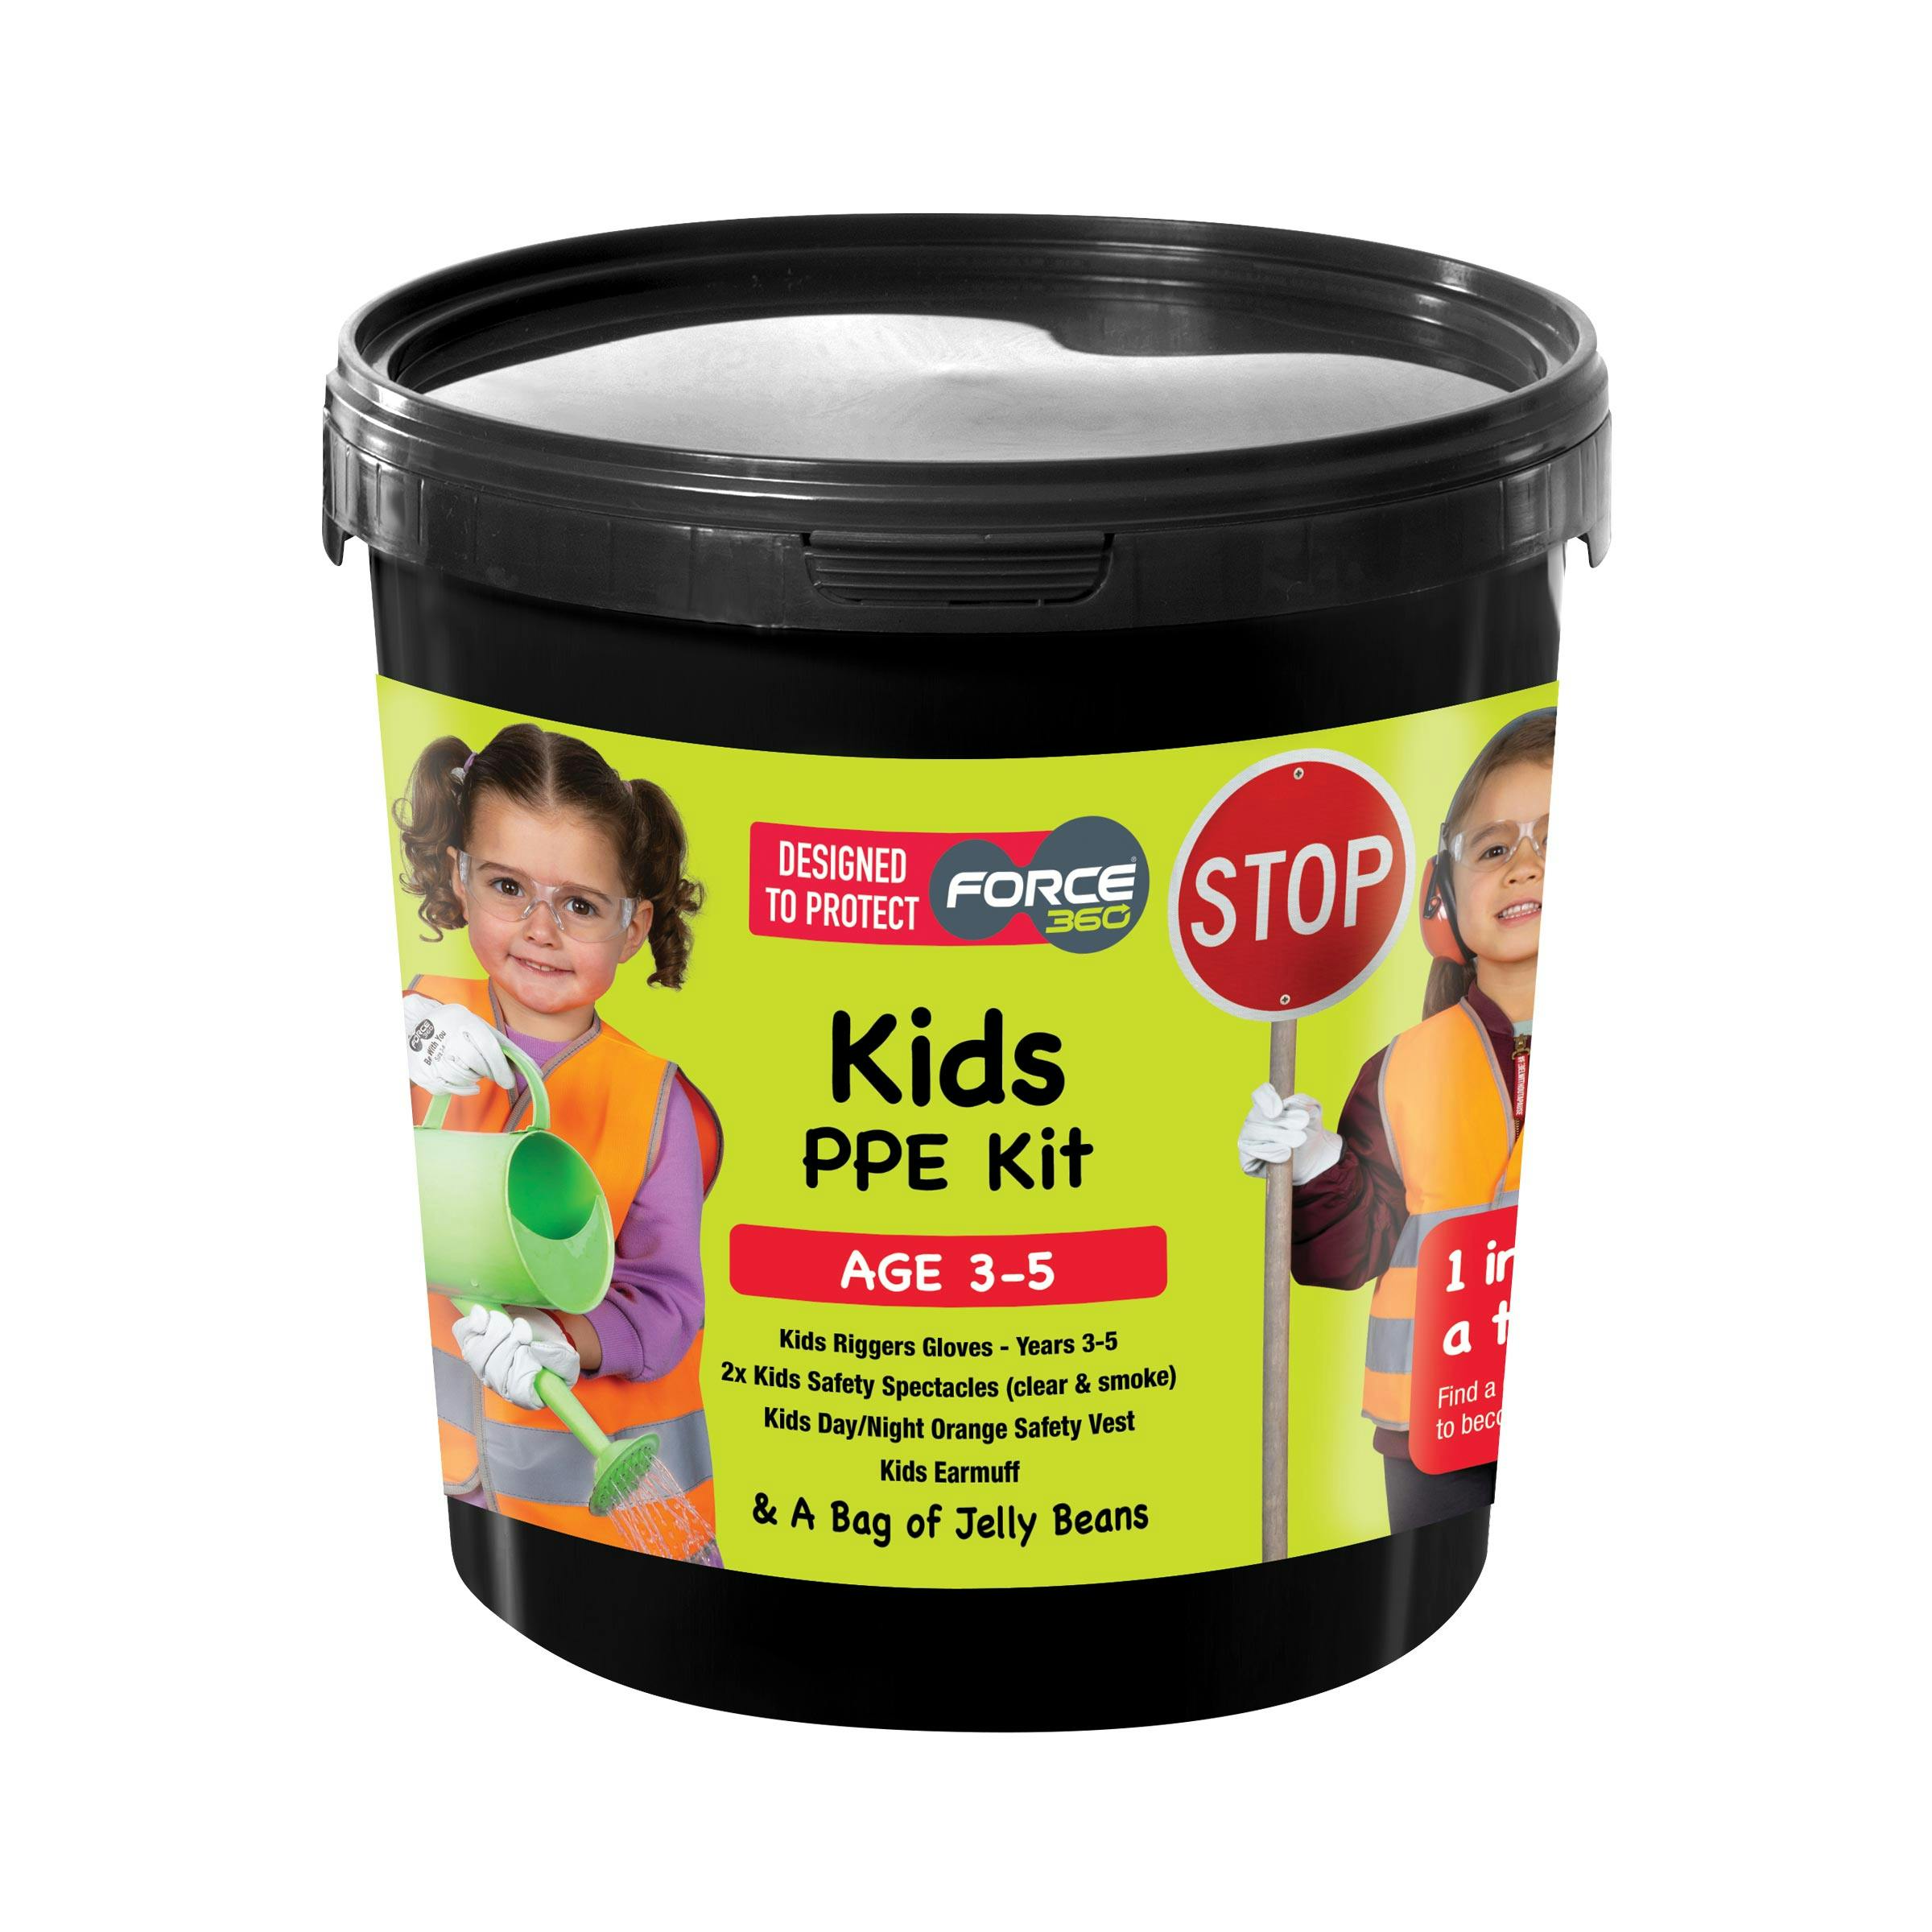 Force360 Kids Age 3-5 PPE Kit